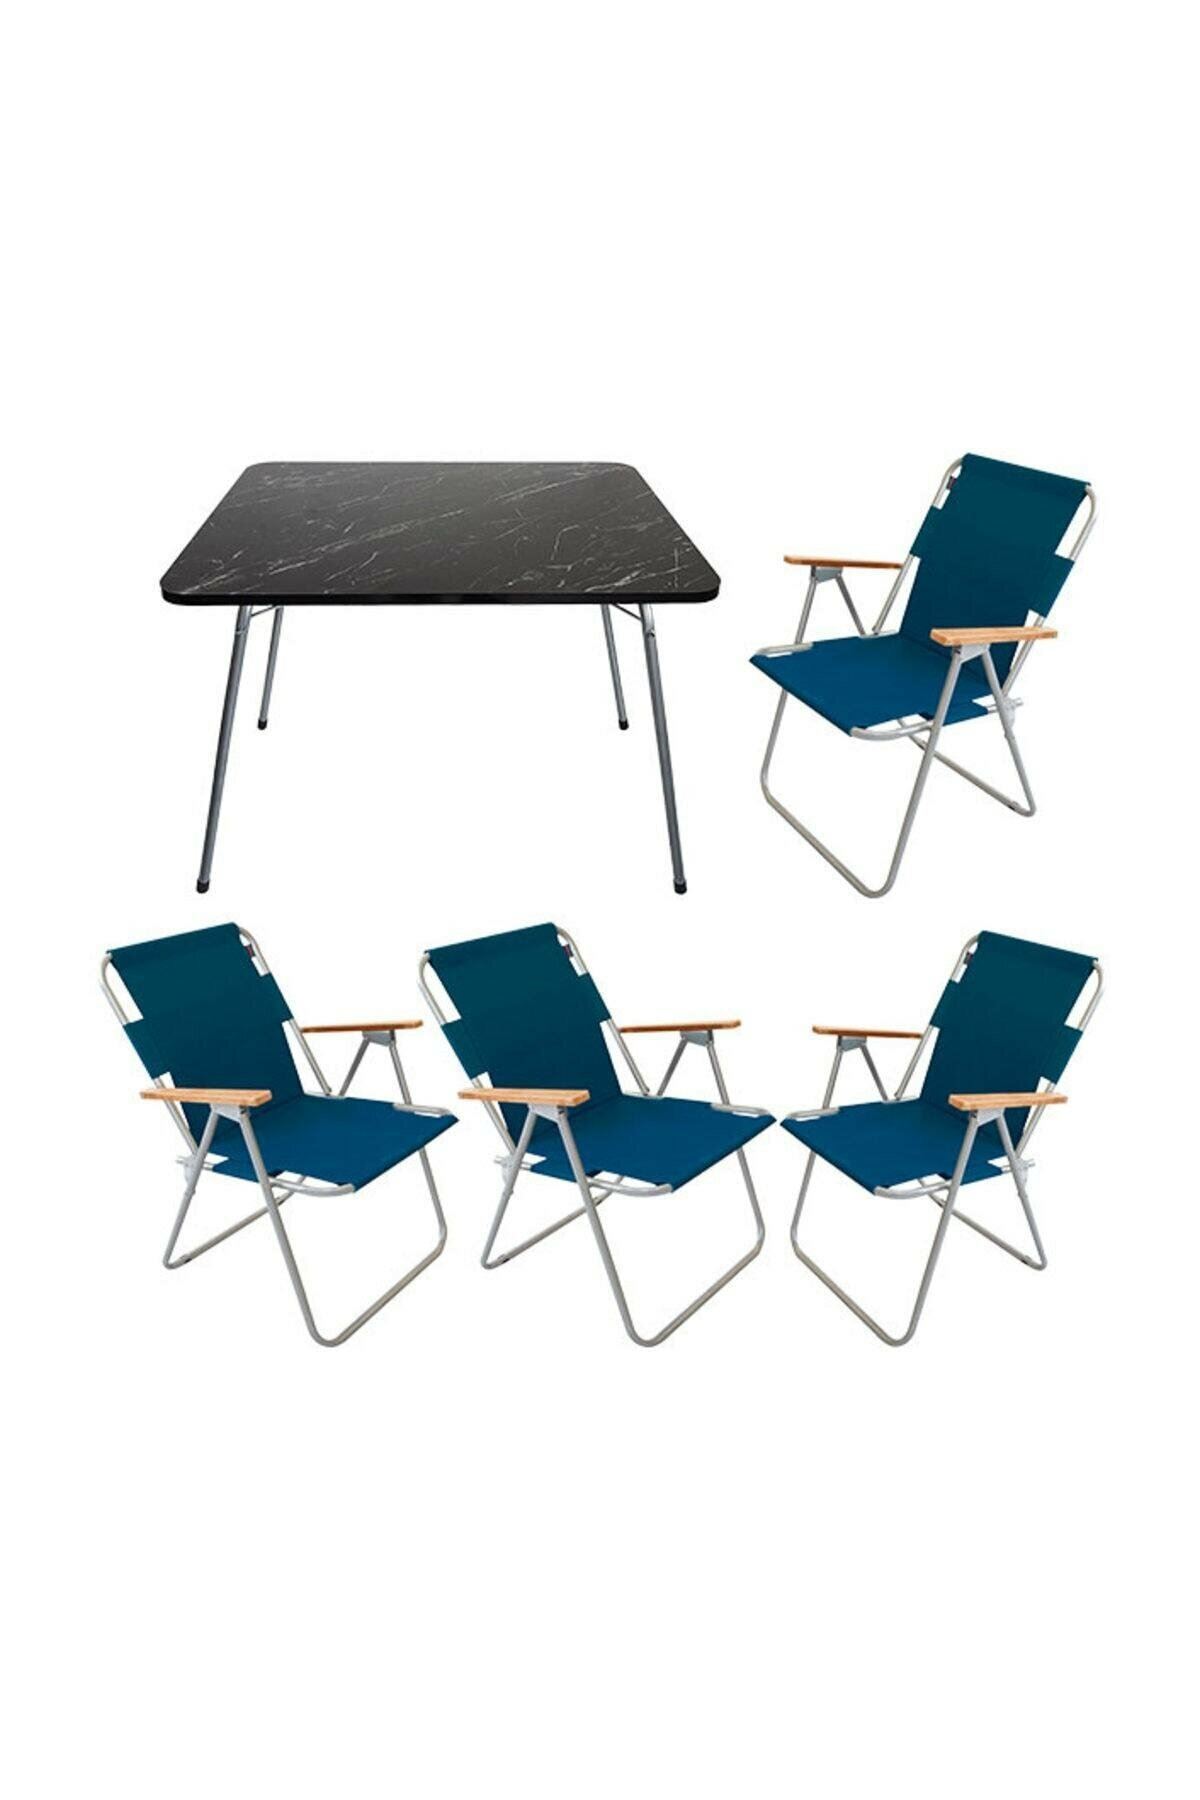 Bofigo 60x80 Granite Folding Table + 4 Pieces Folding Chair Camping Set Garden Balcony Set Blue